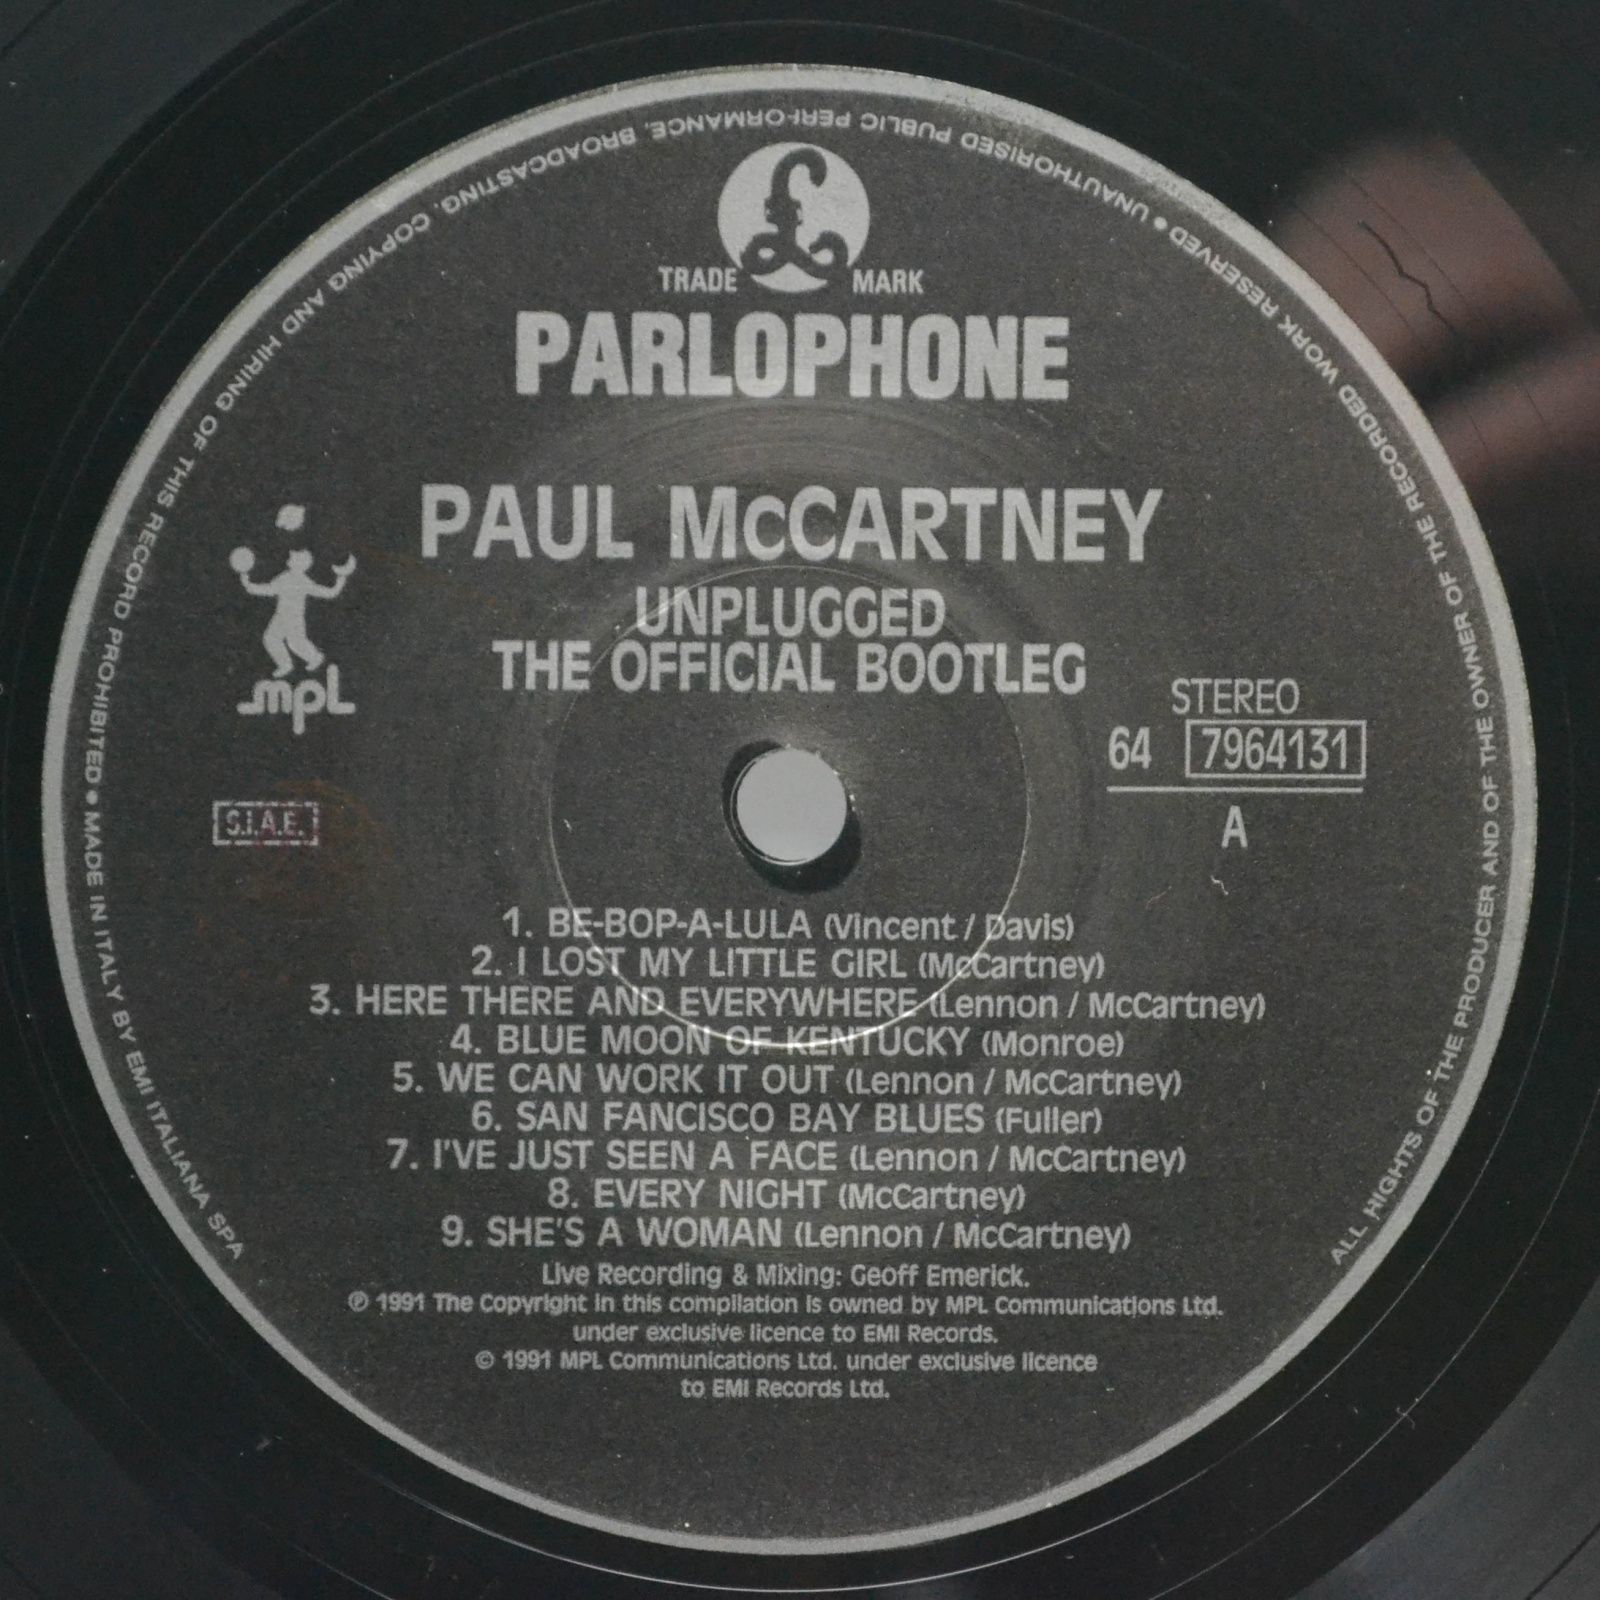 Paul McCartney — Unplugged (The Official Bootleg), 1991